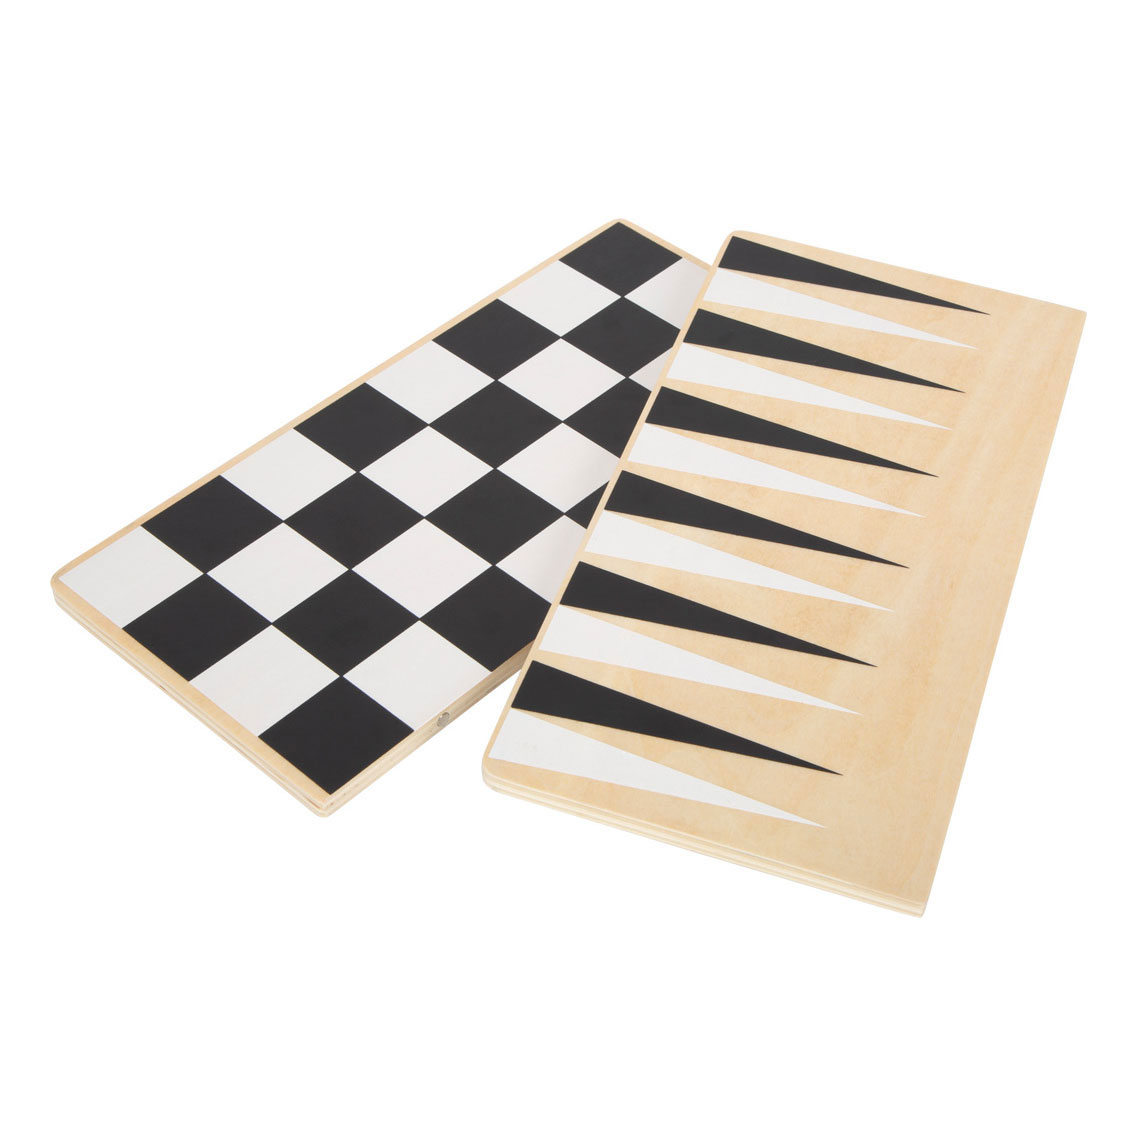 Small Foot - Jeu d'échecs et de backgammon (édition dorée)